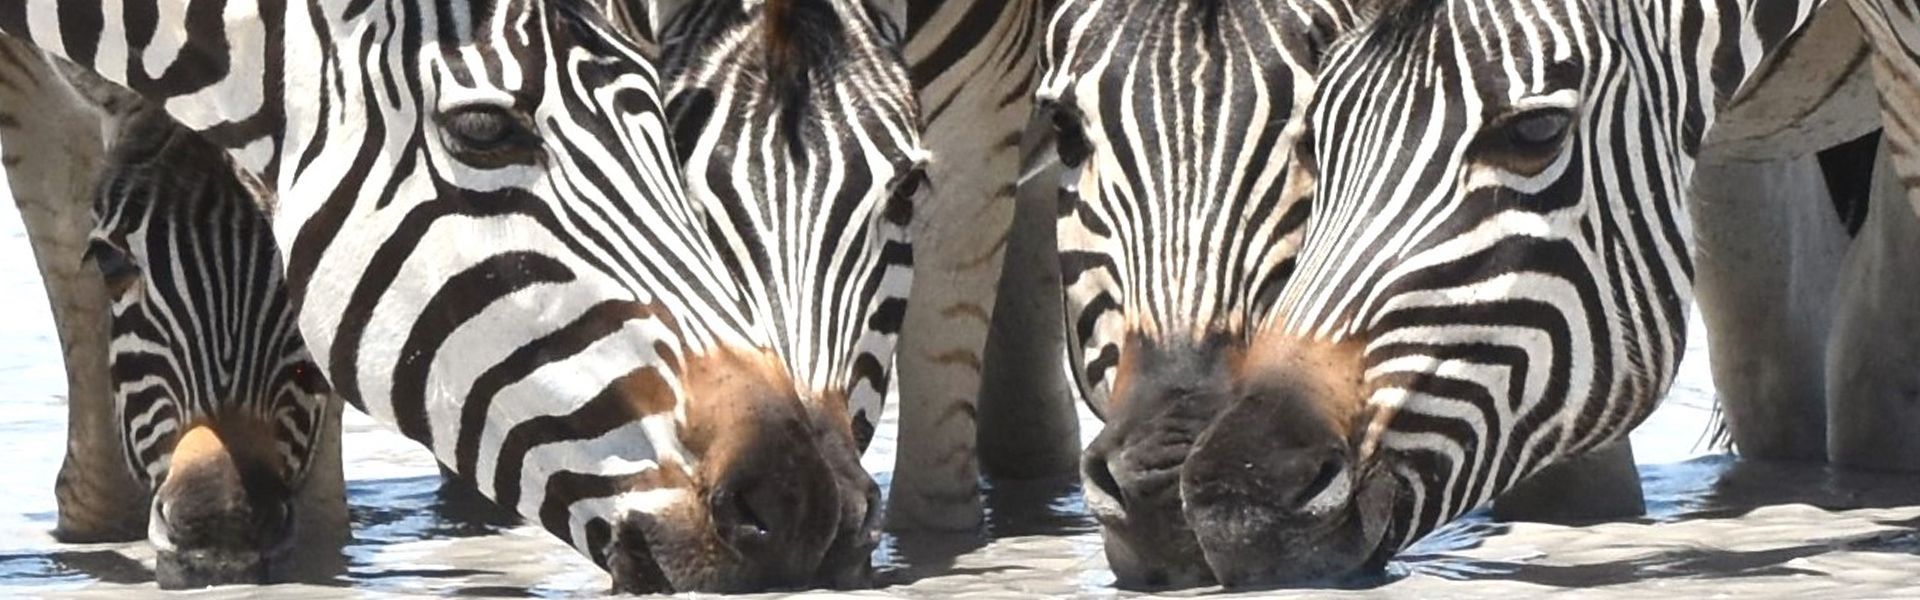 Zebras are Botswana's national animal ... from the Kalahari to the Okavango Delta, their stripes will delight you everywhere